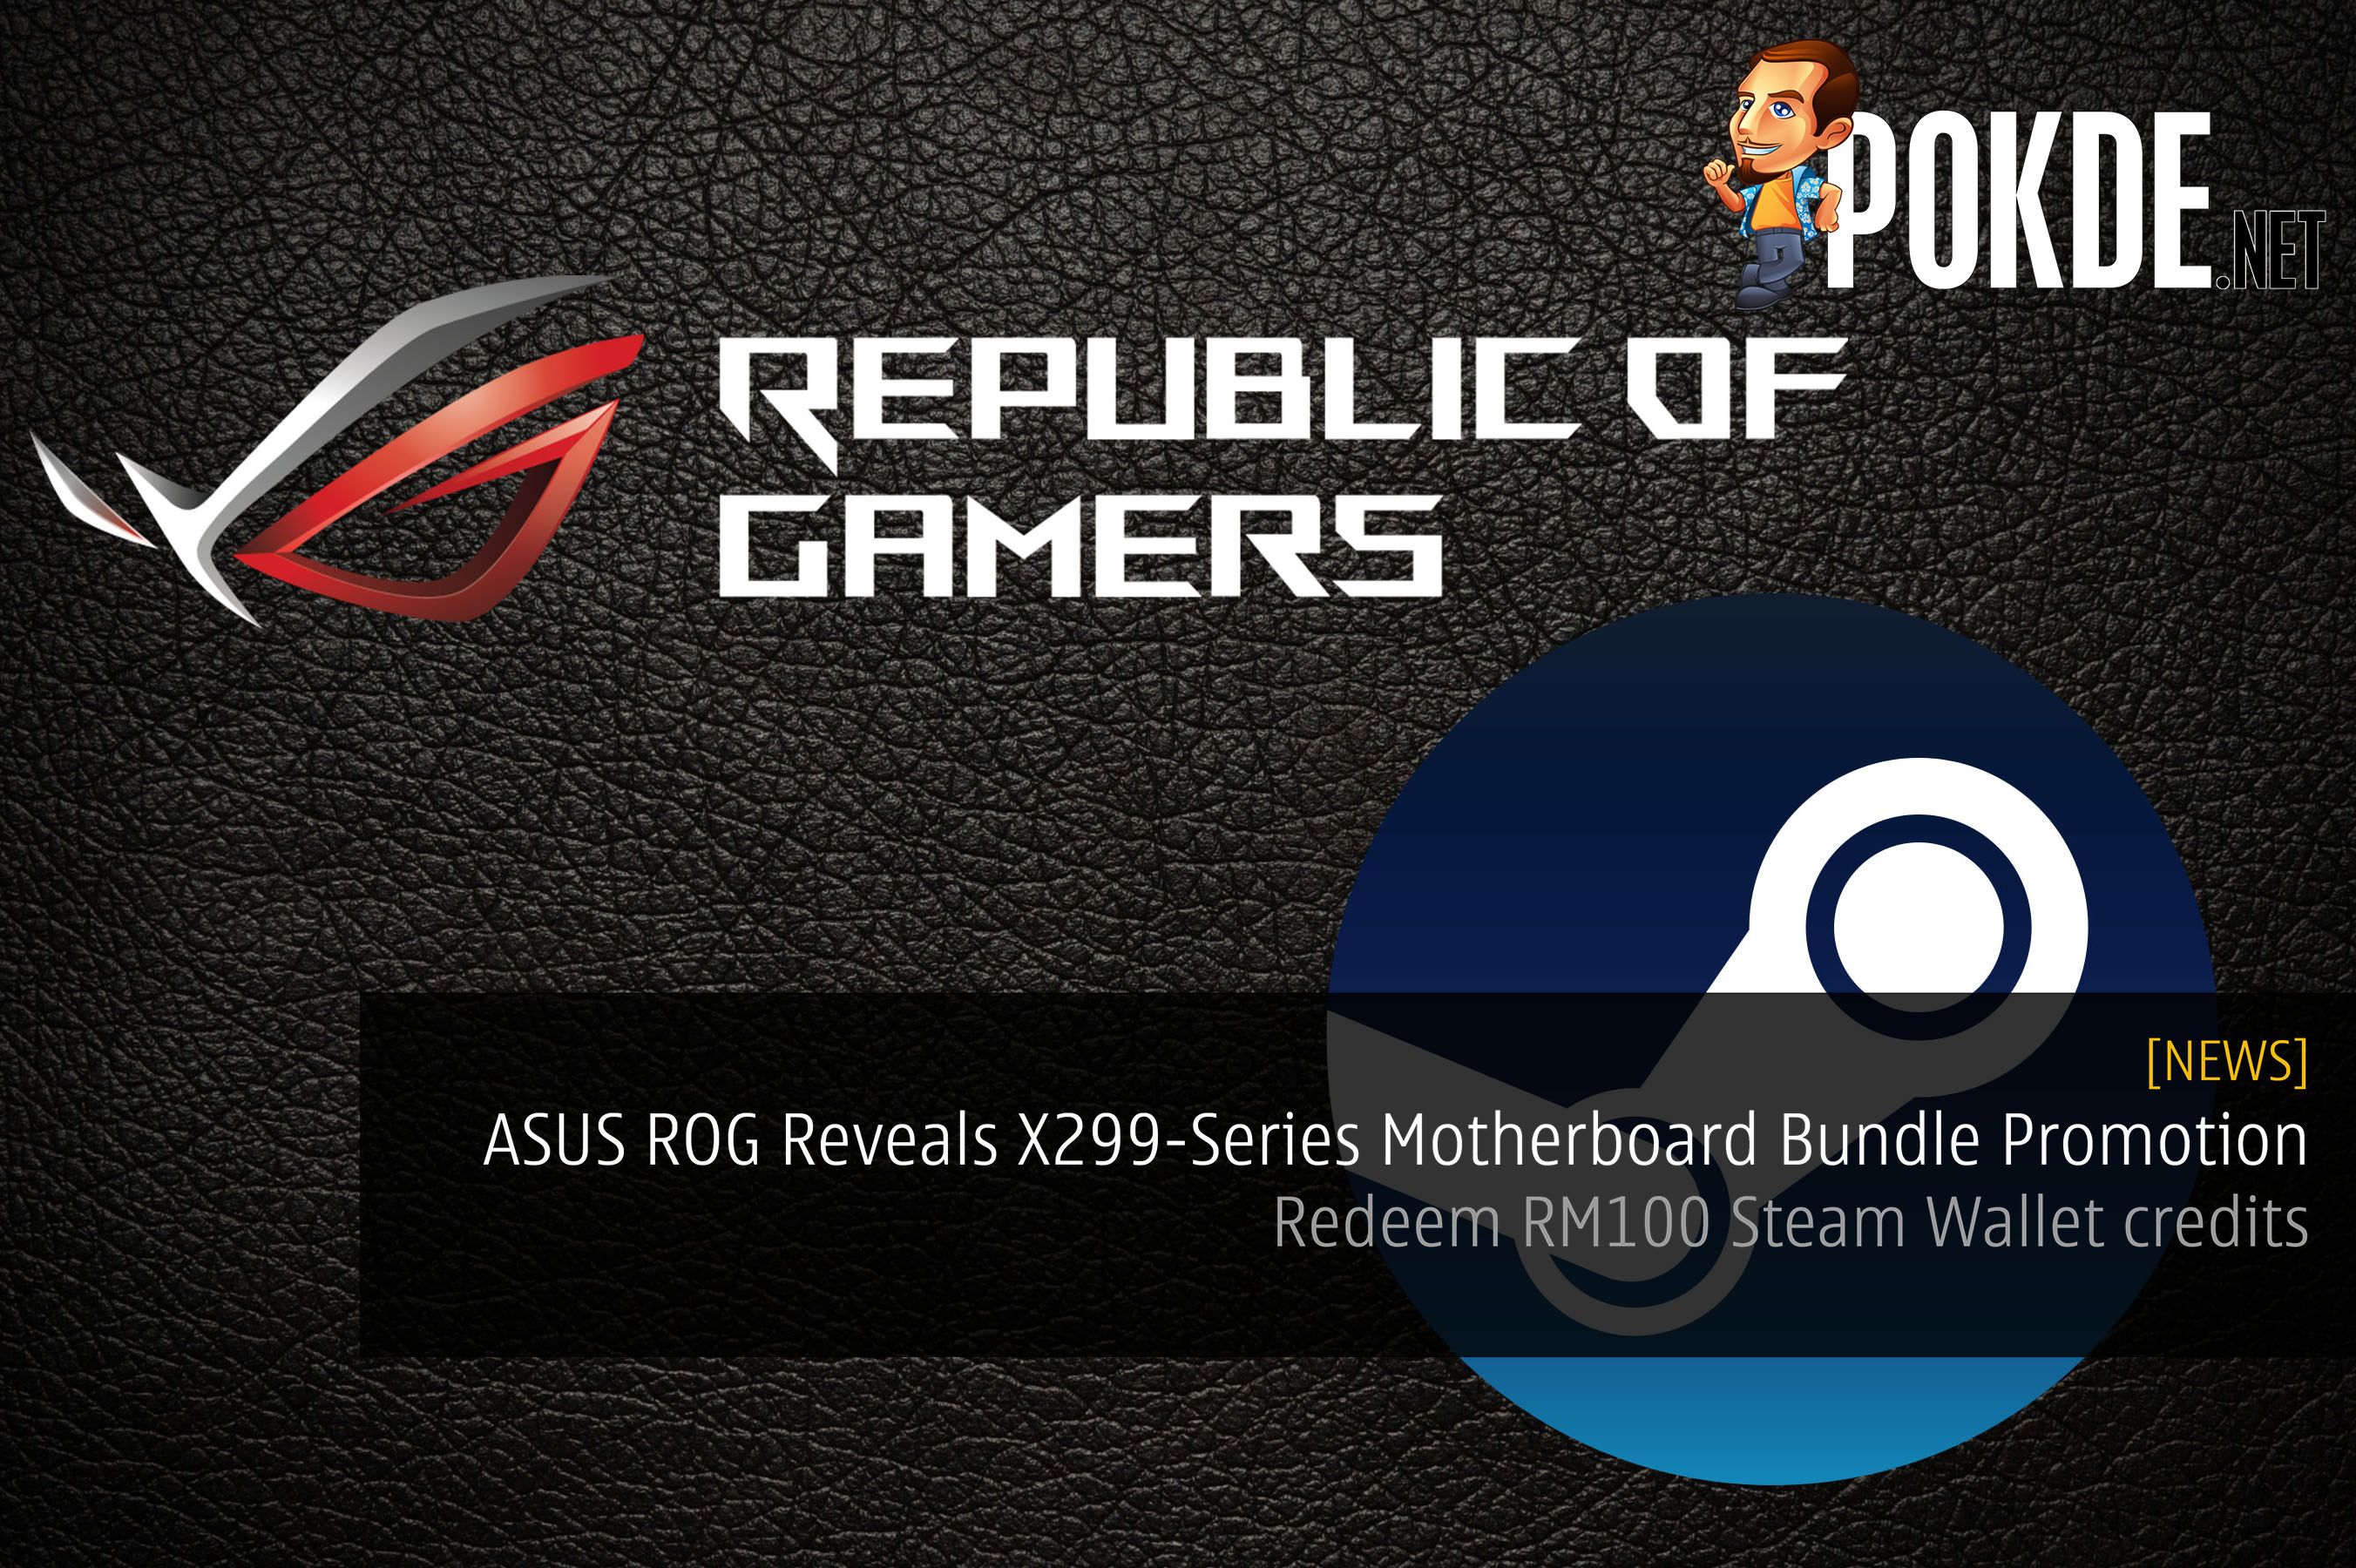 ASUS ROG Reveals X299 Motherboard Series Bundle Promotion - Redeem RM100 Steam Wallet credits 18